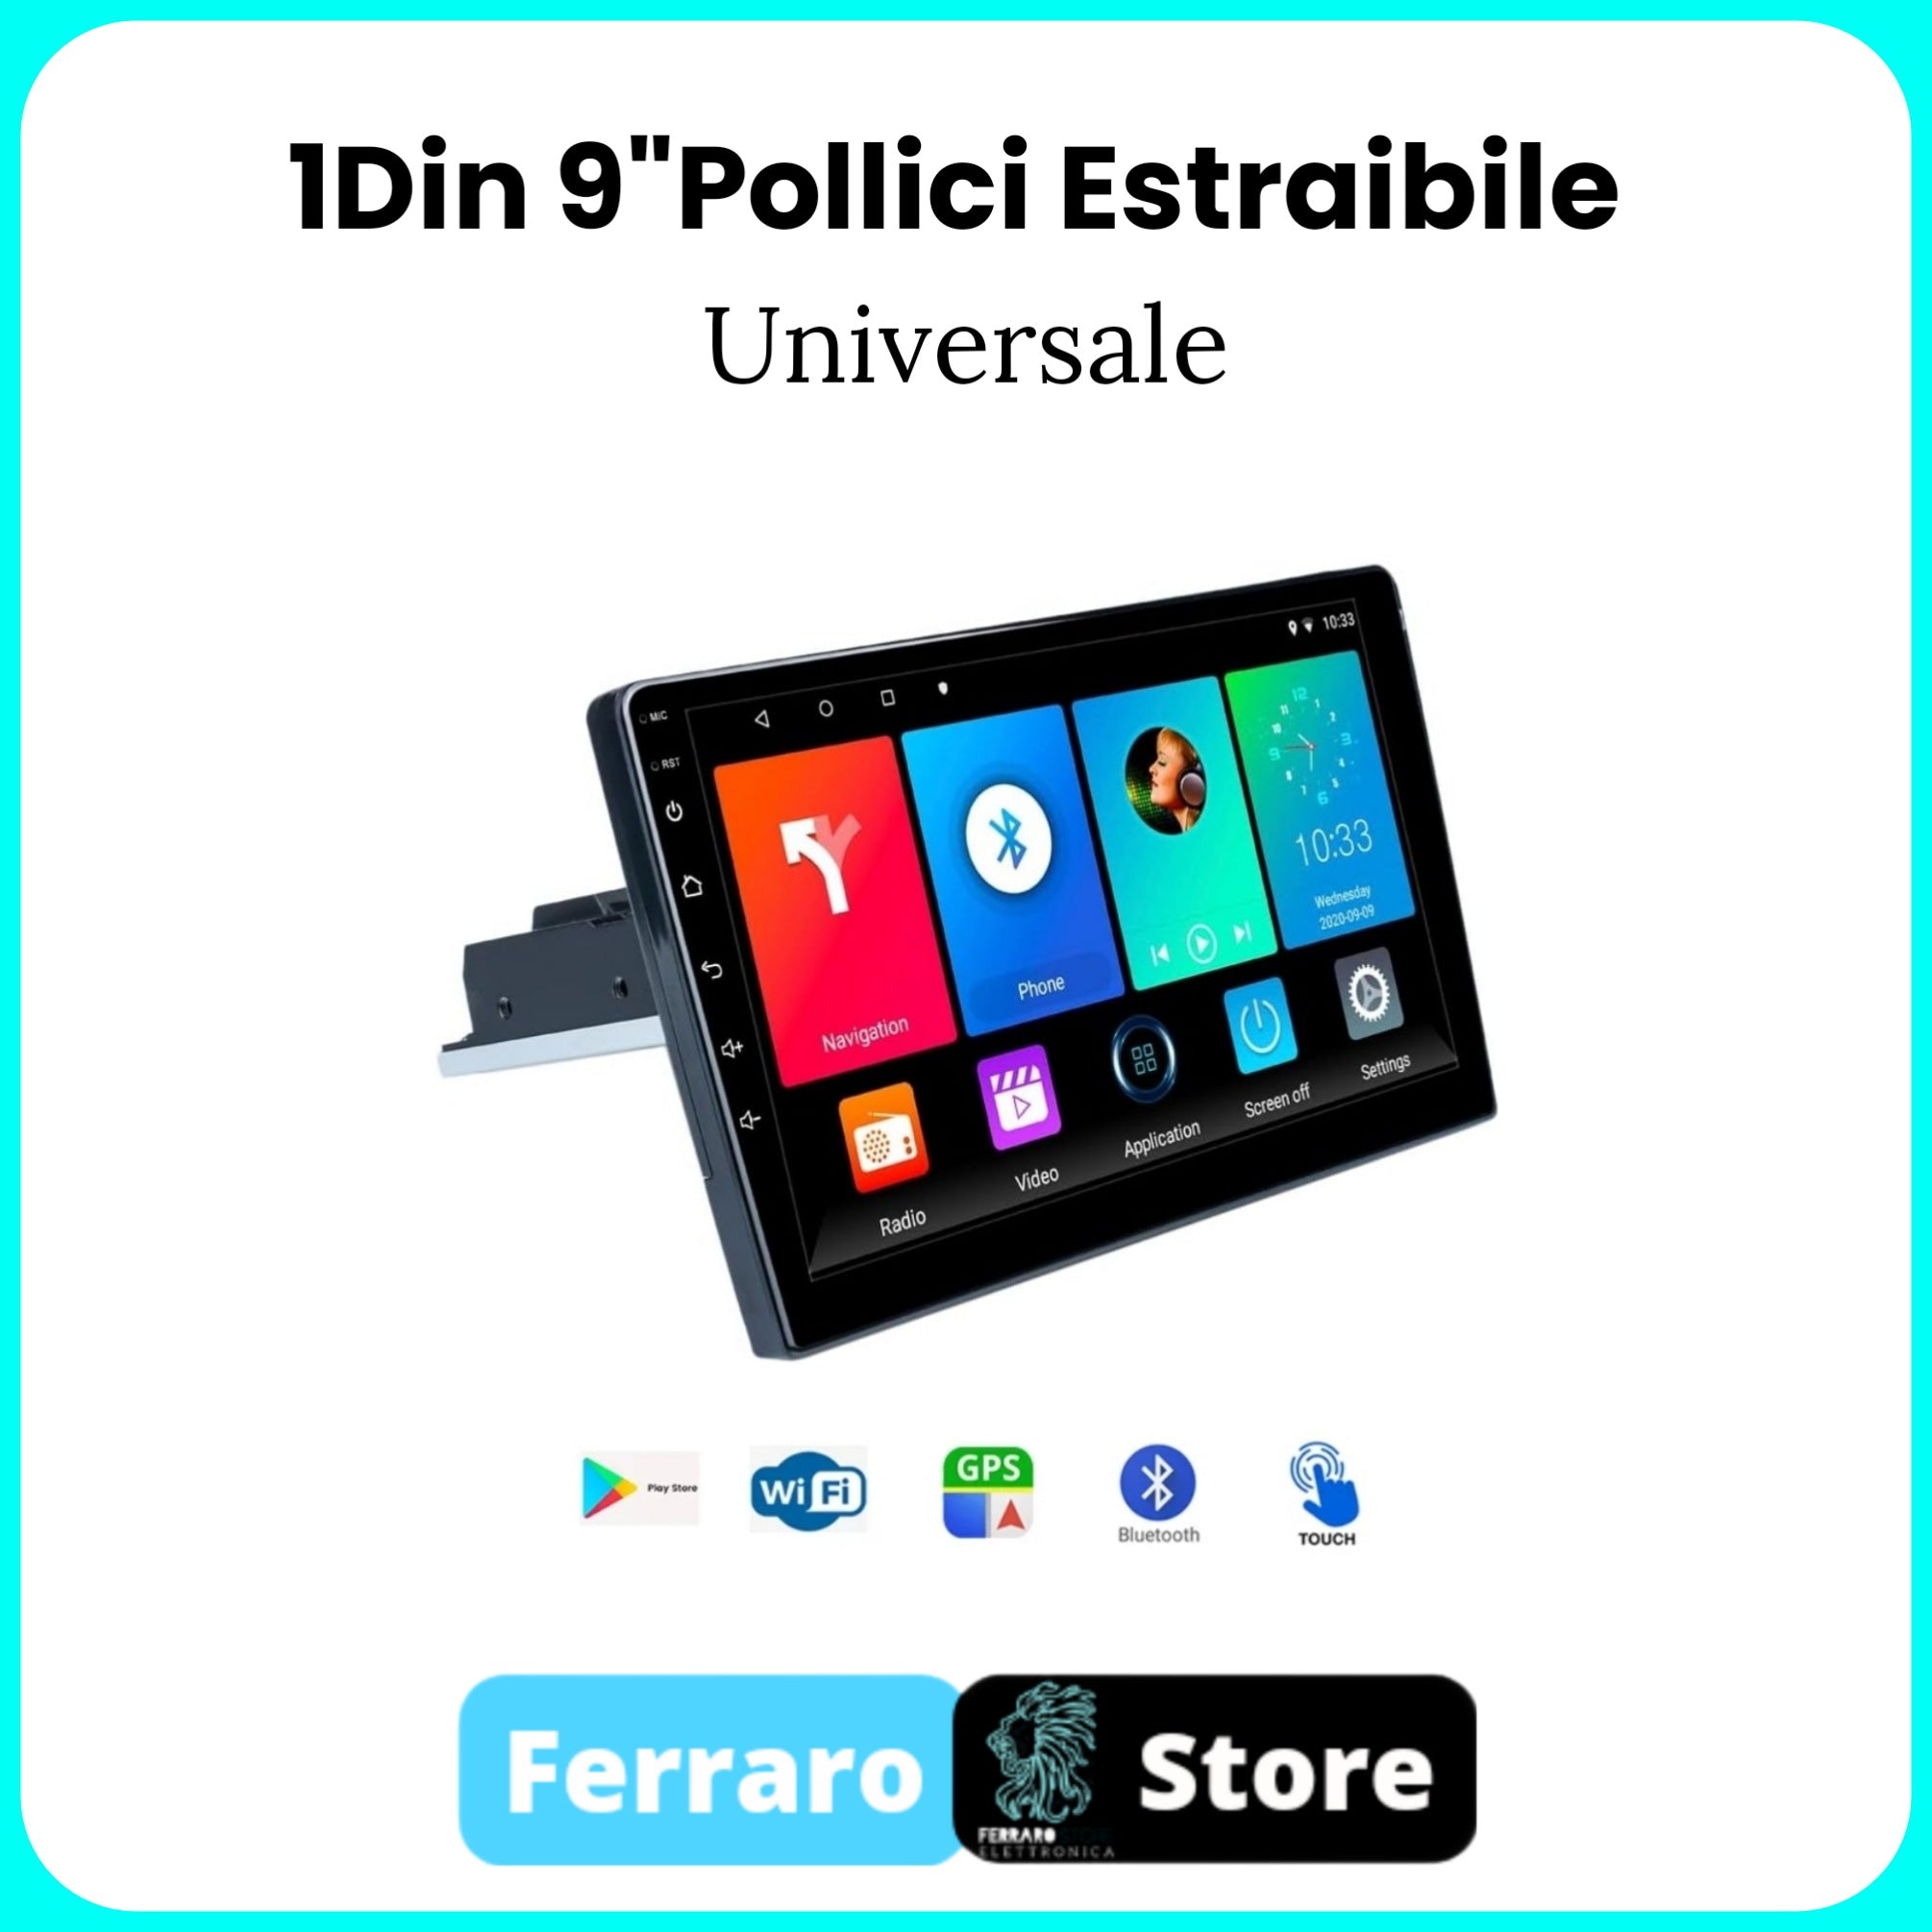 Autoradio Universale [ESTRAIBILE] - 1Din 9"Pollici, Bluetooth, Radio, Android, PlayStore, Youtube, Navigatore